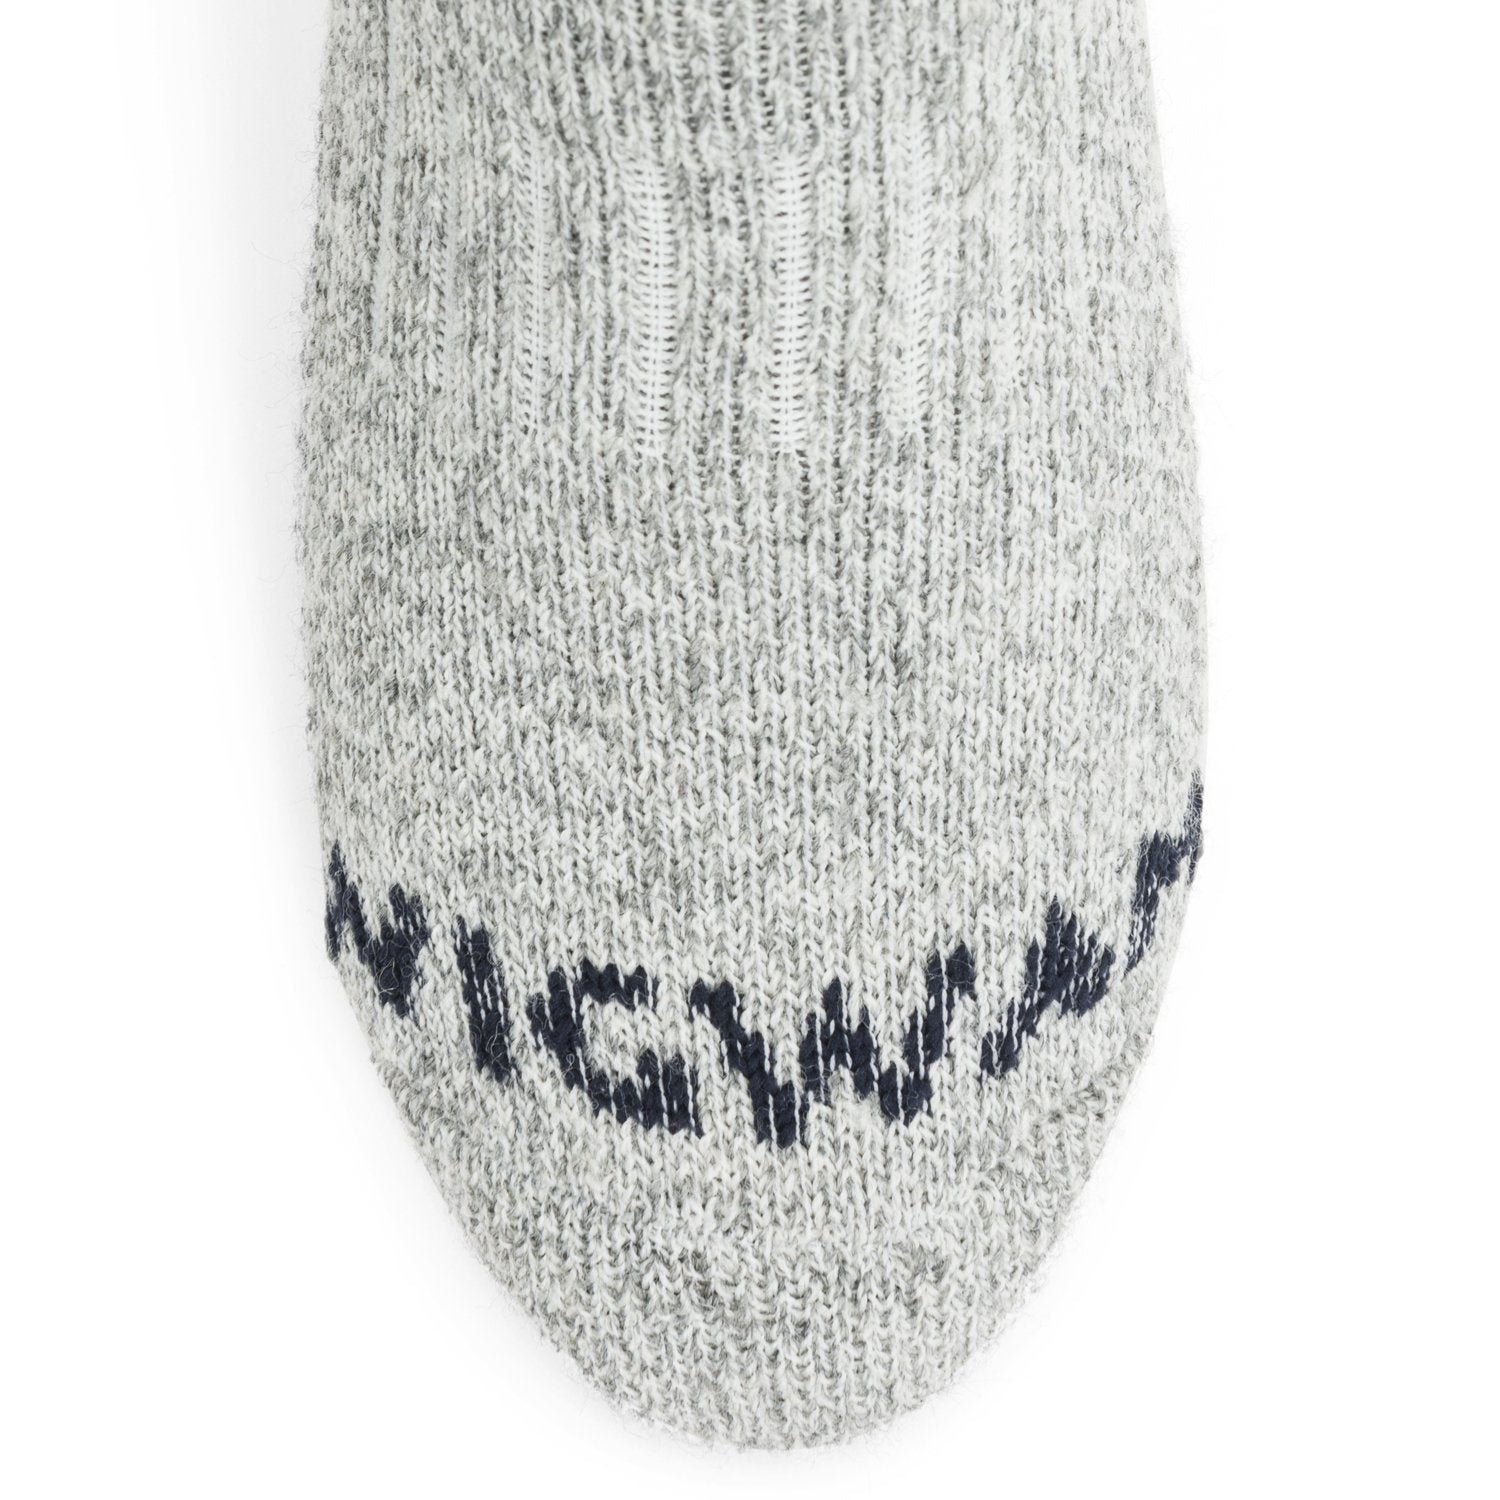 40 Below II Wool Heavyweight Sock - Light Grey toe perspective - made in The USA Wigwam Socks